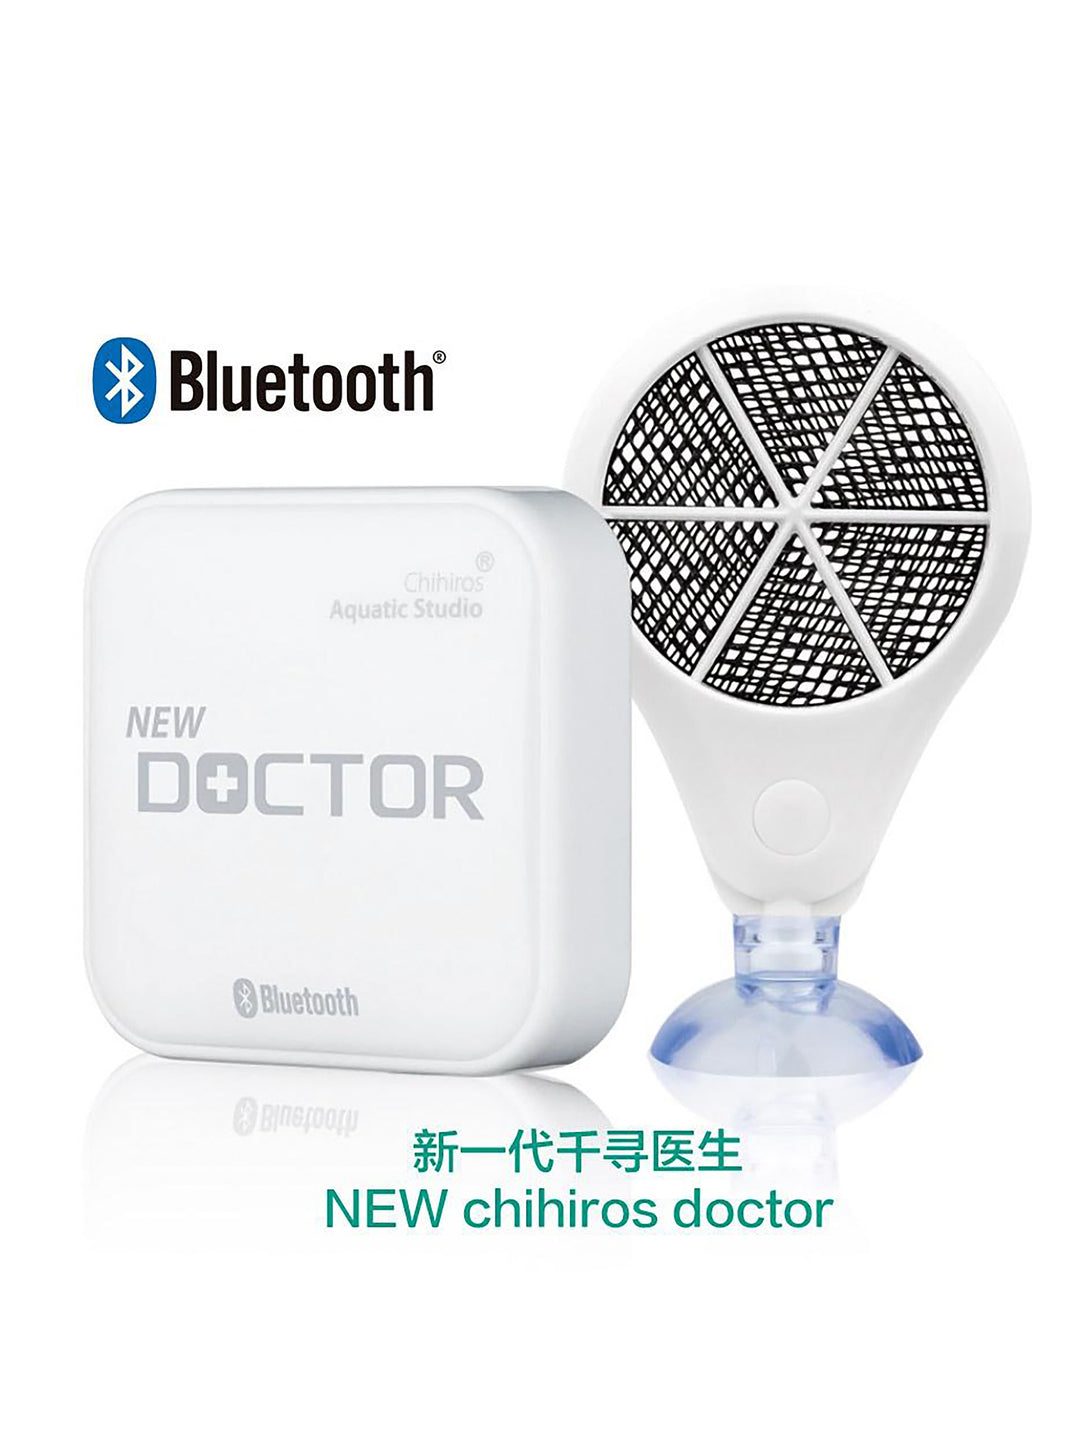 NEW DOCTOR Bluetooth edition - nepalaquastudio